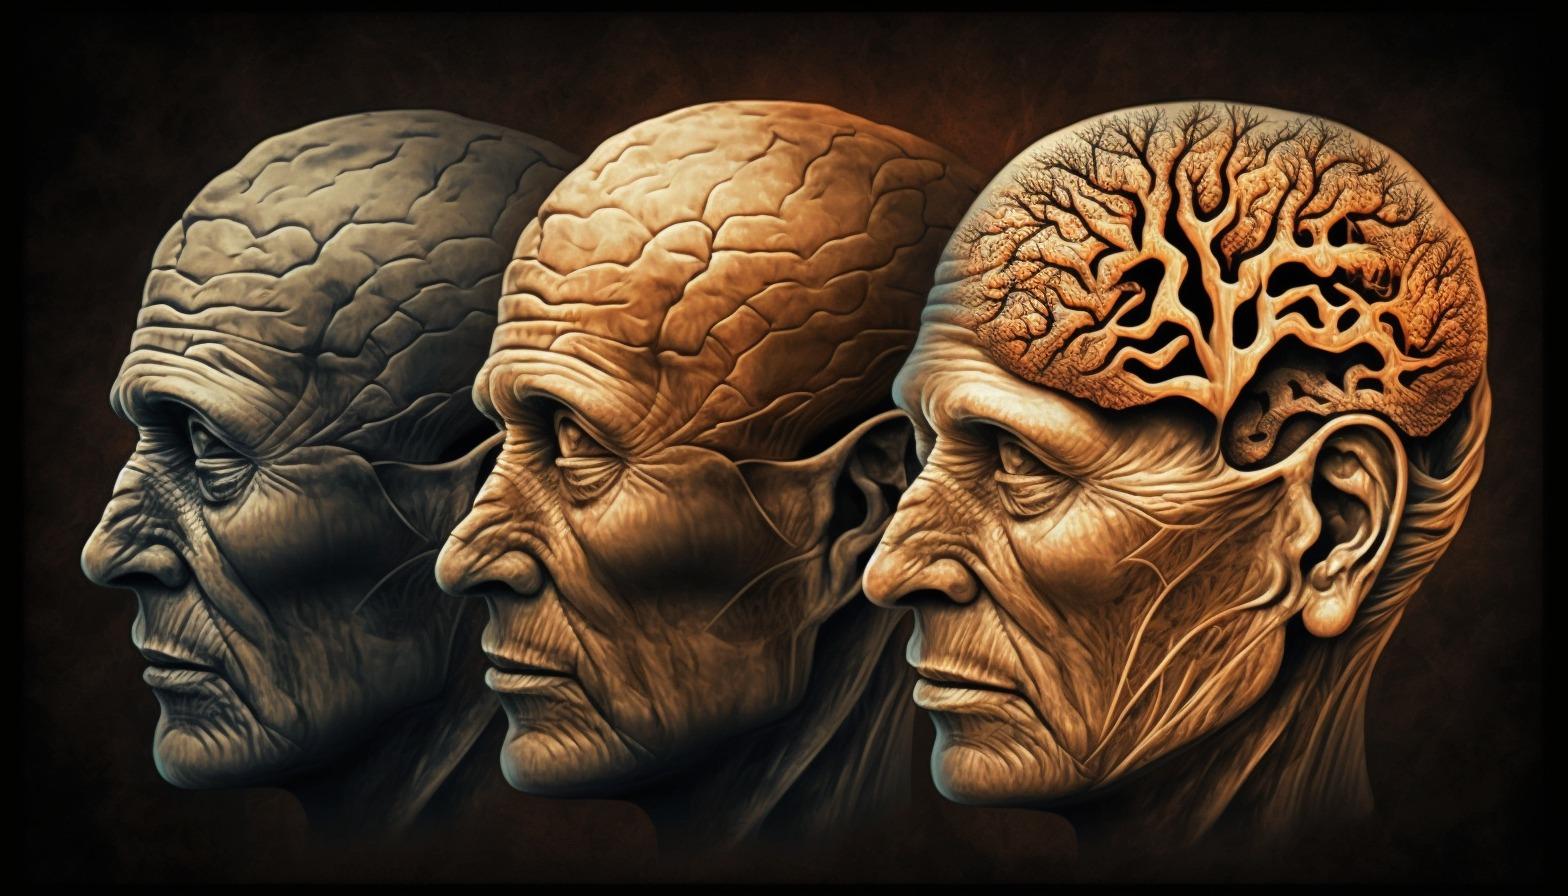 Wrinkly brain association